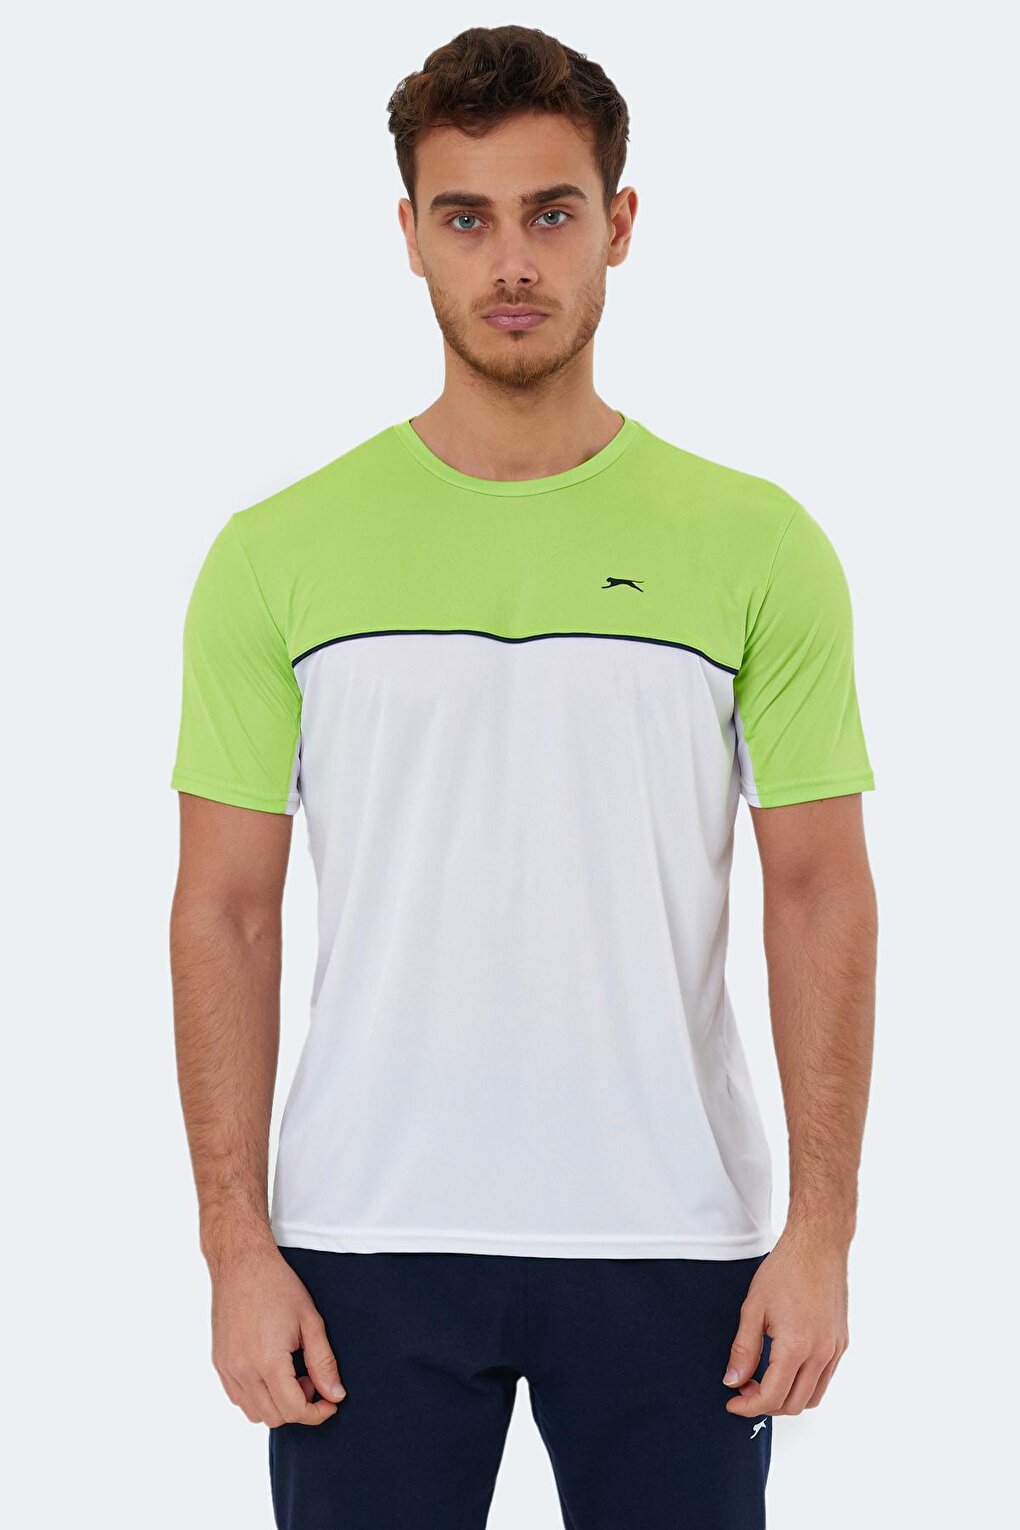 Мужская футболка с коротким рукавом OBSERVE Белый/Зеленый SLAZENGER